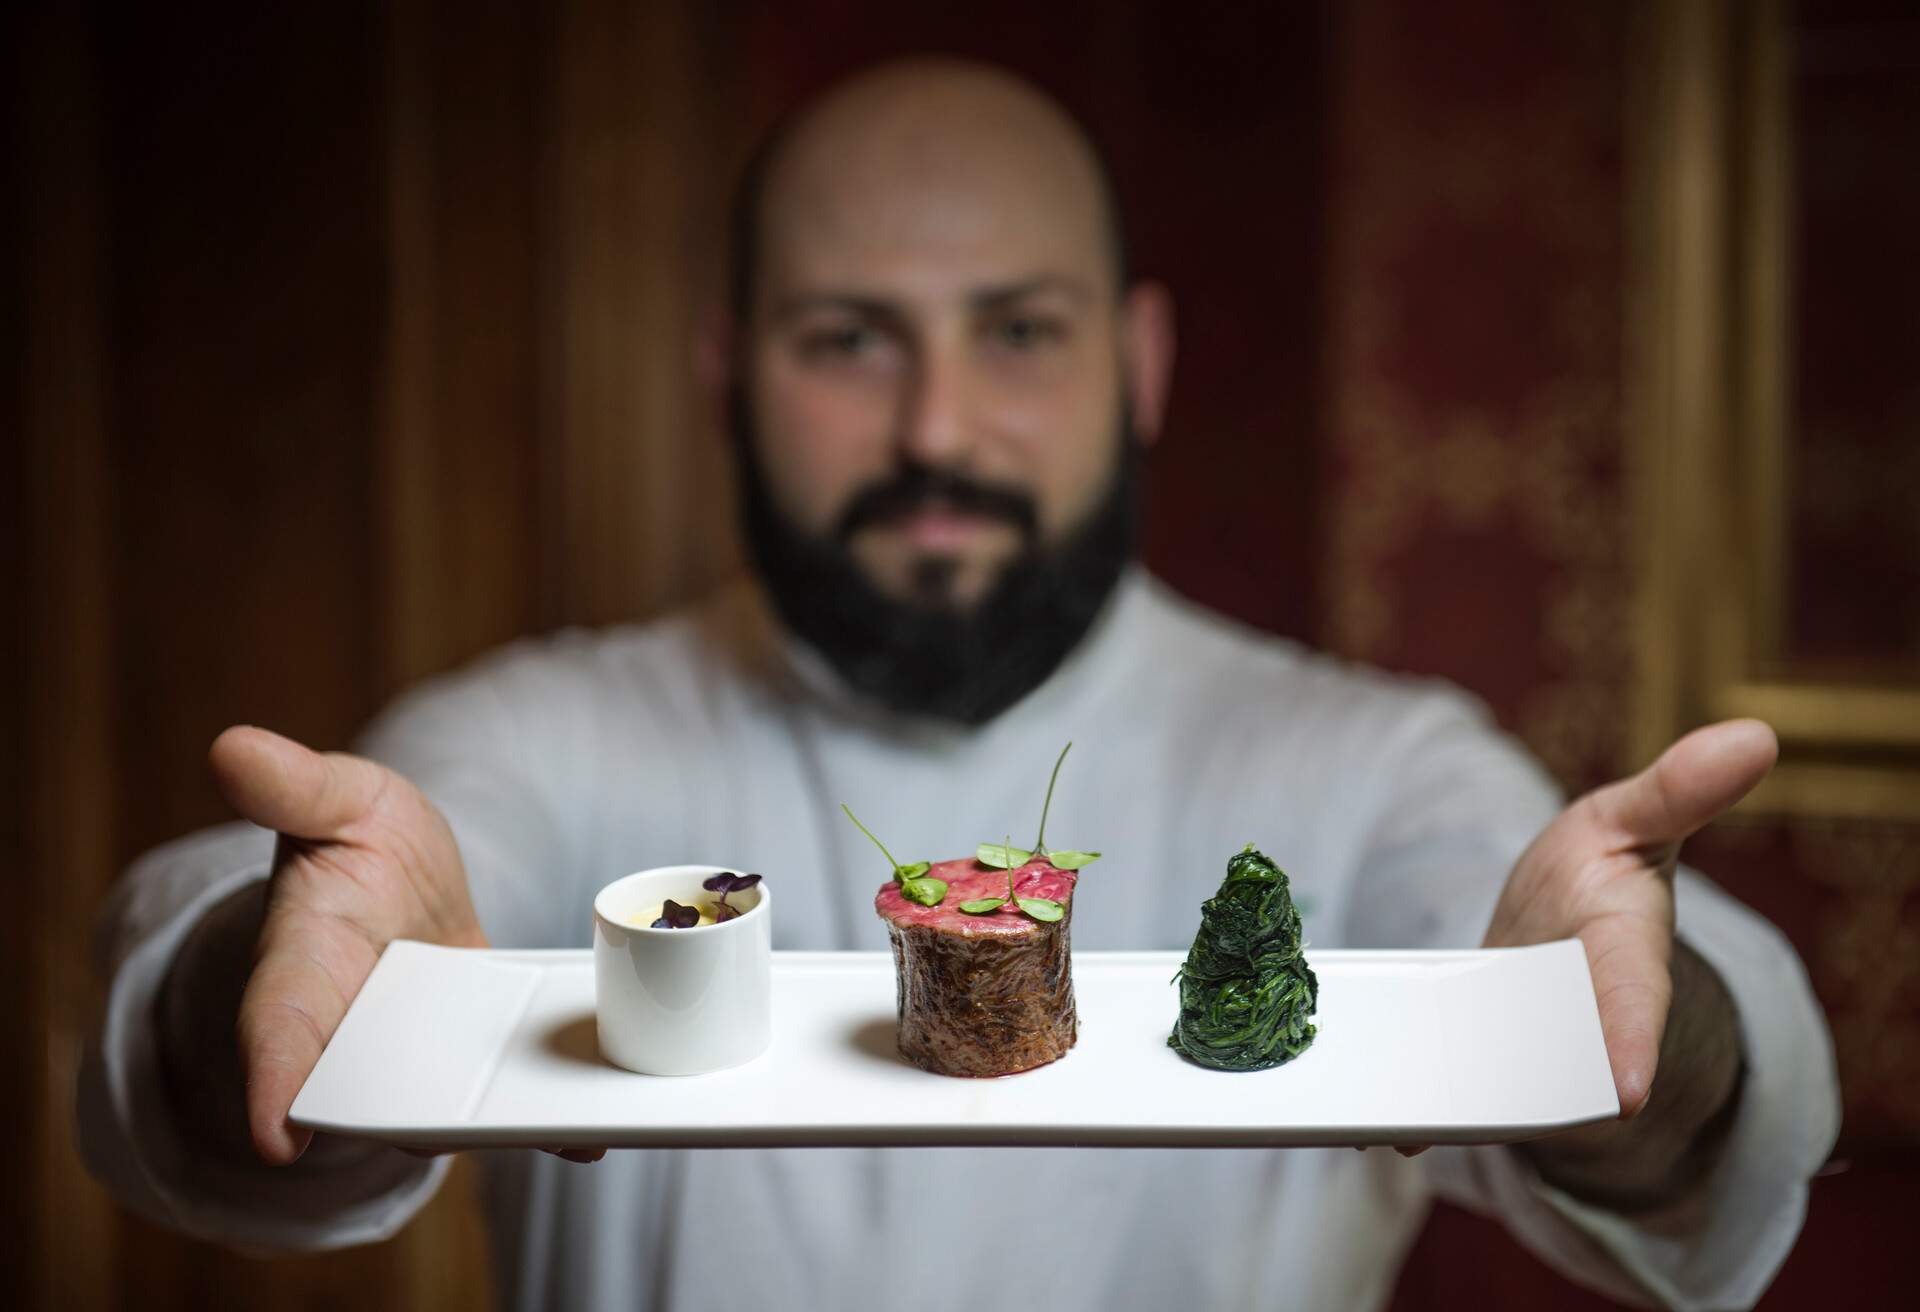 Luxury hotel Chef showing food under Low-key lighting